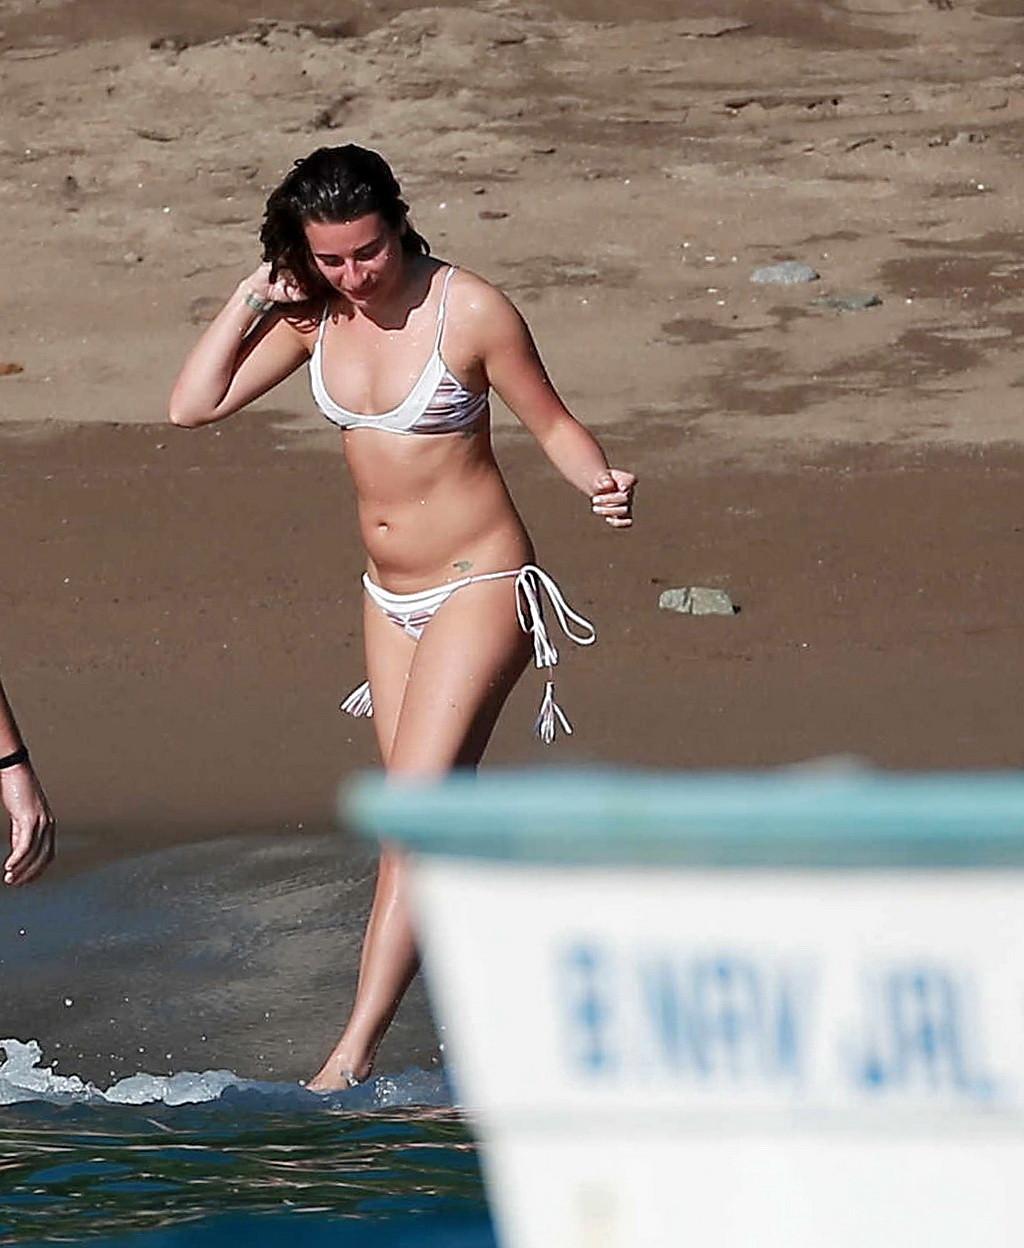 Lea Michele wearing skimpy bikini on a beach in Mexico #75177130